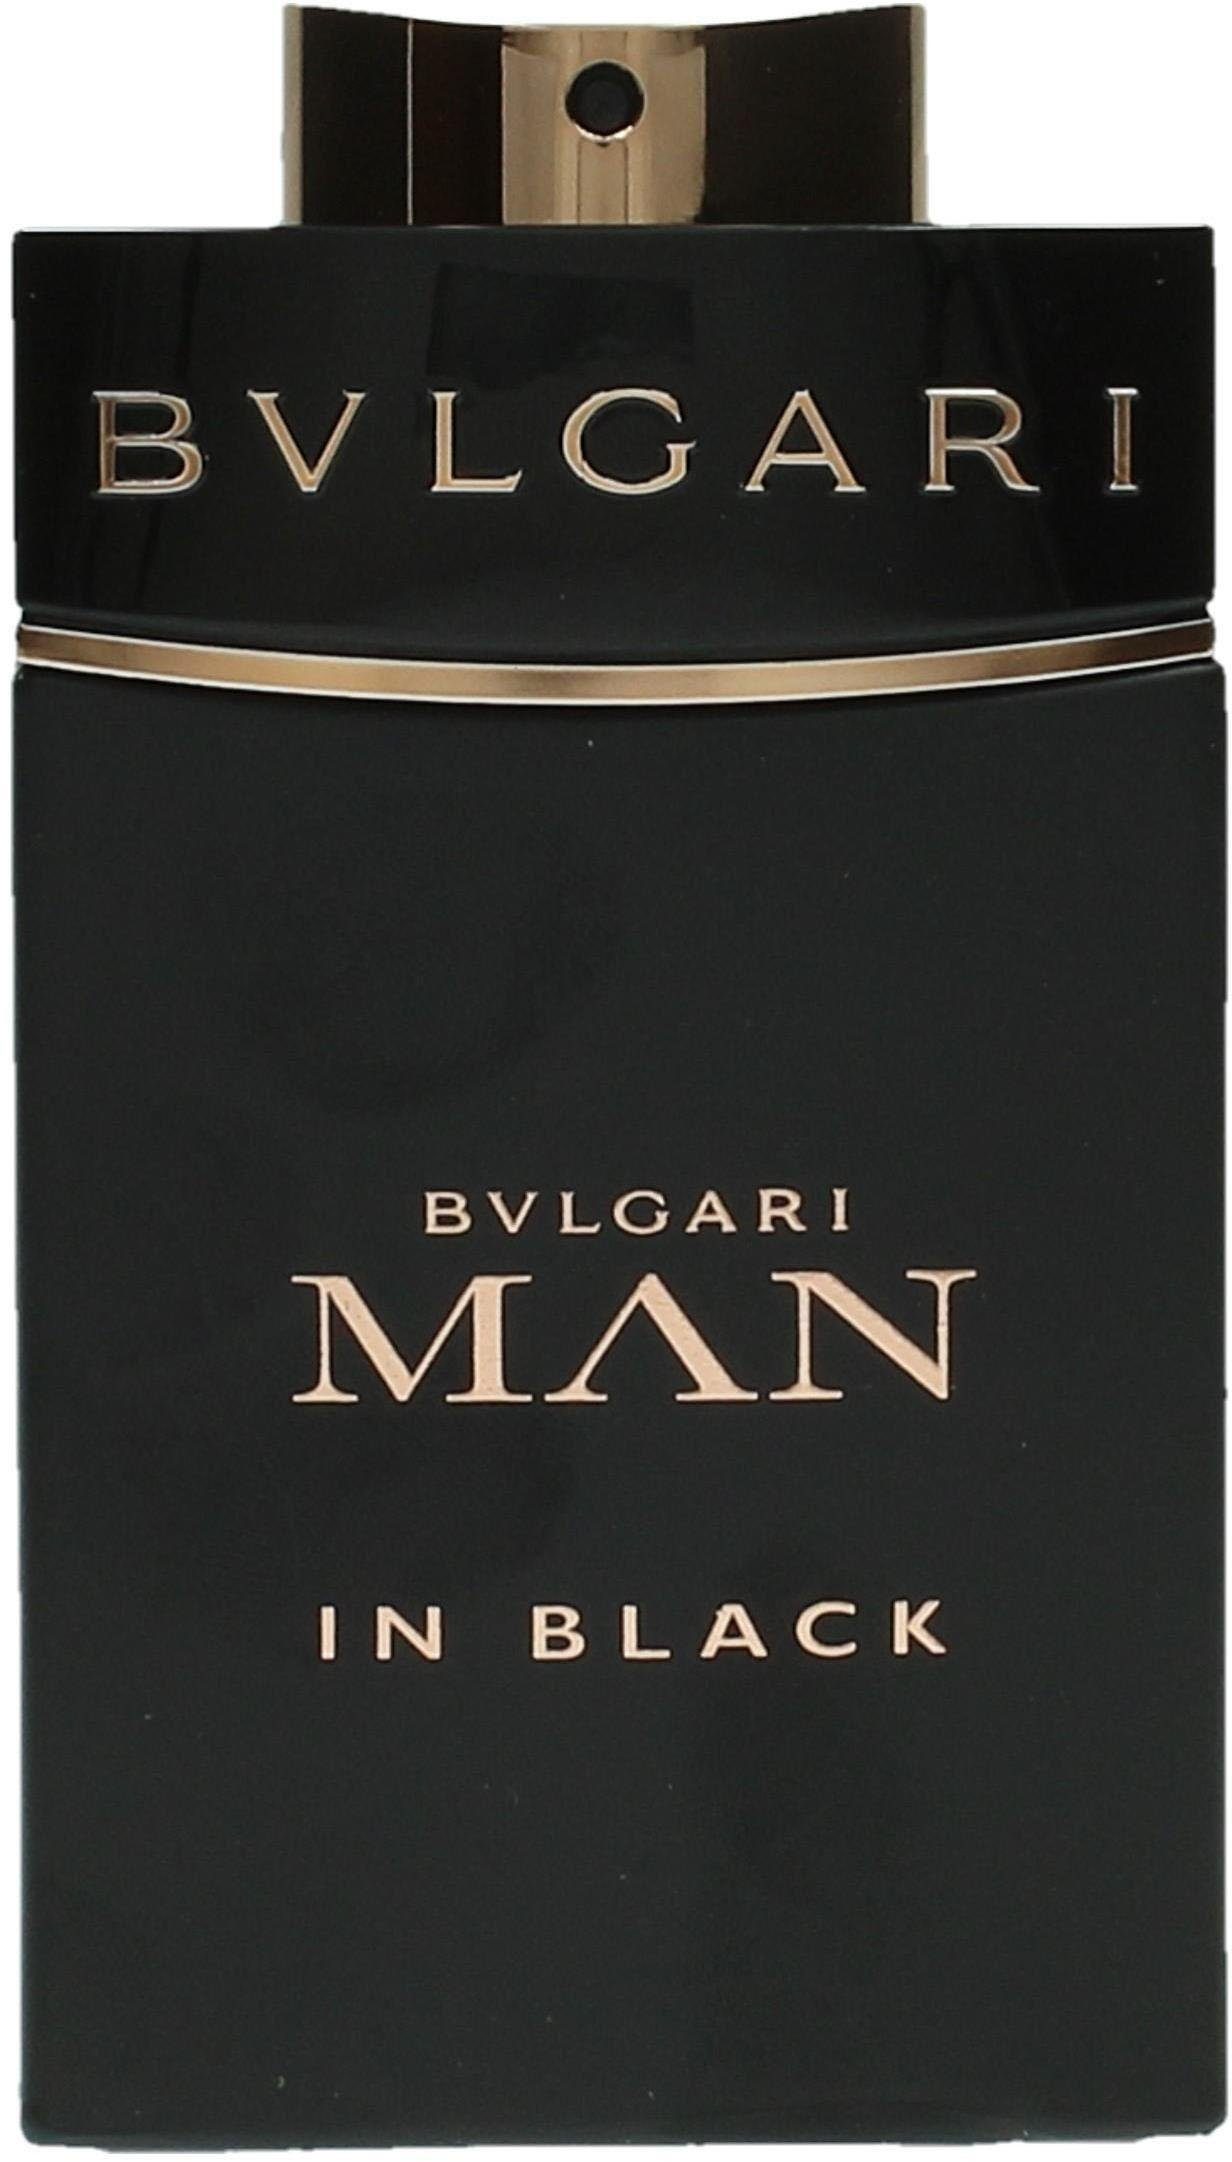 BVLGARI Eau de Parfum Man in black